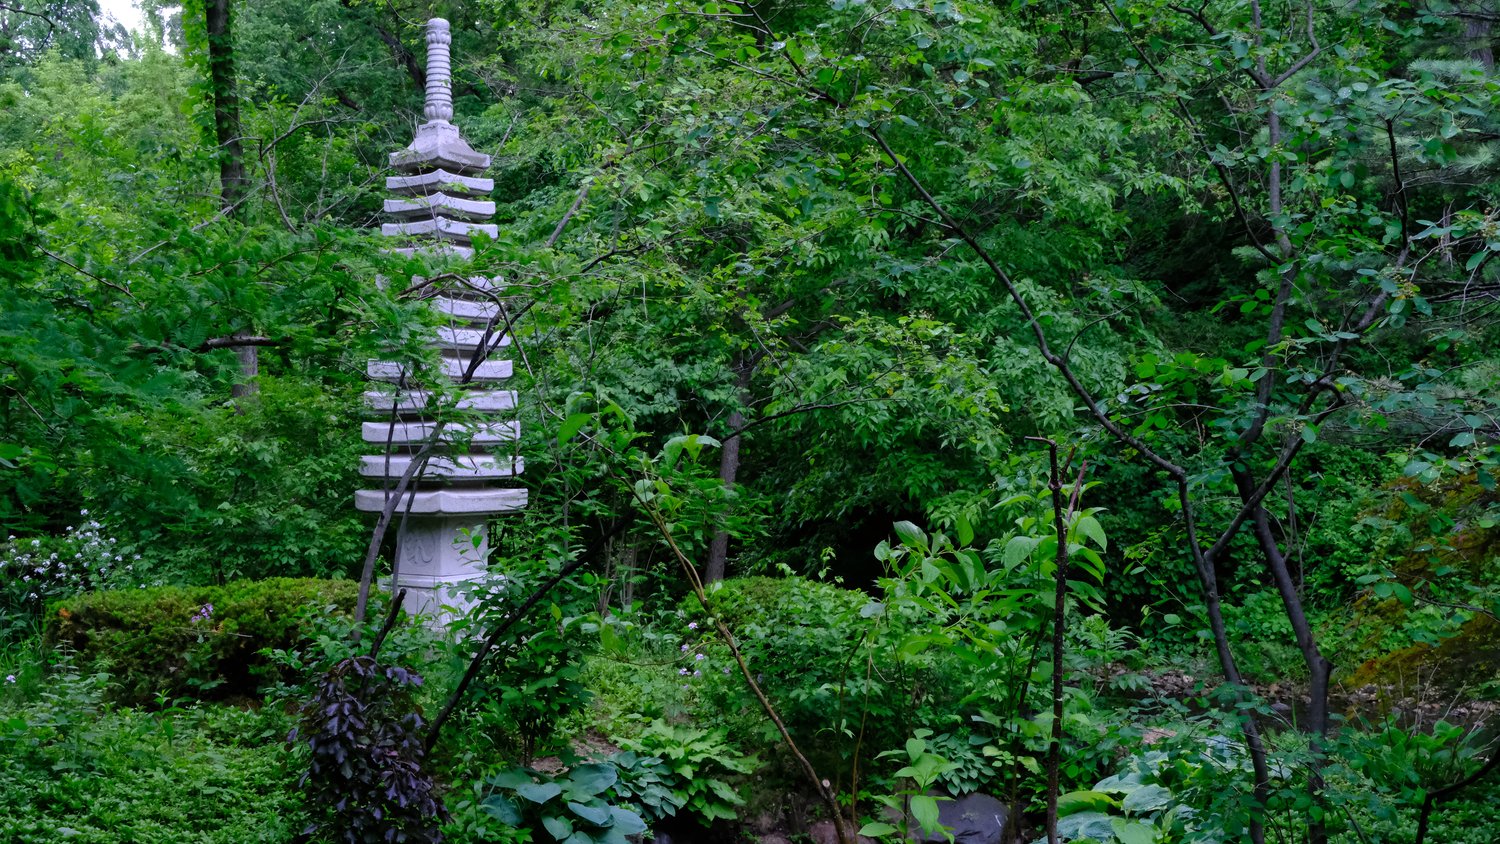 Pagoda standing amongst the greenery.